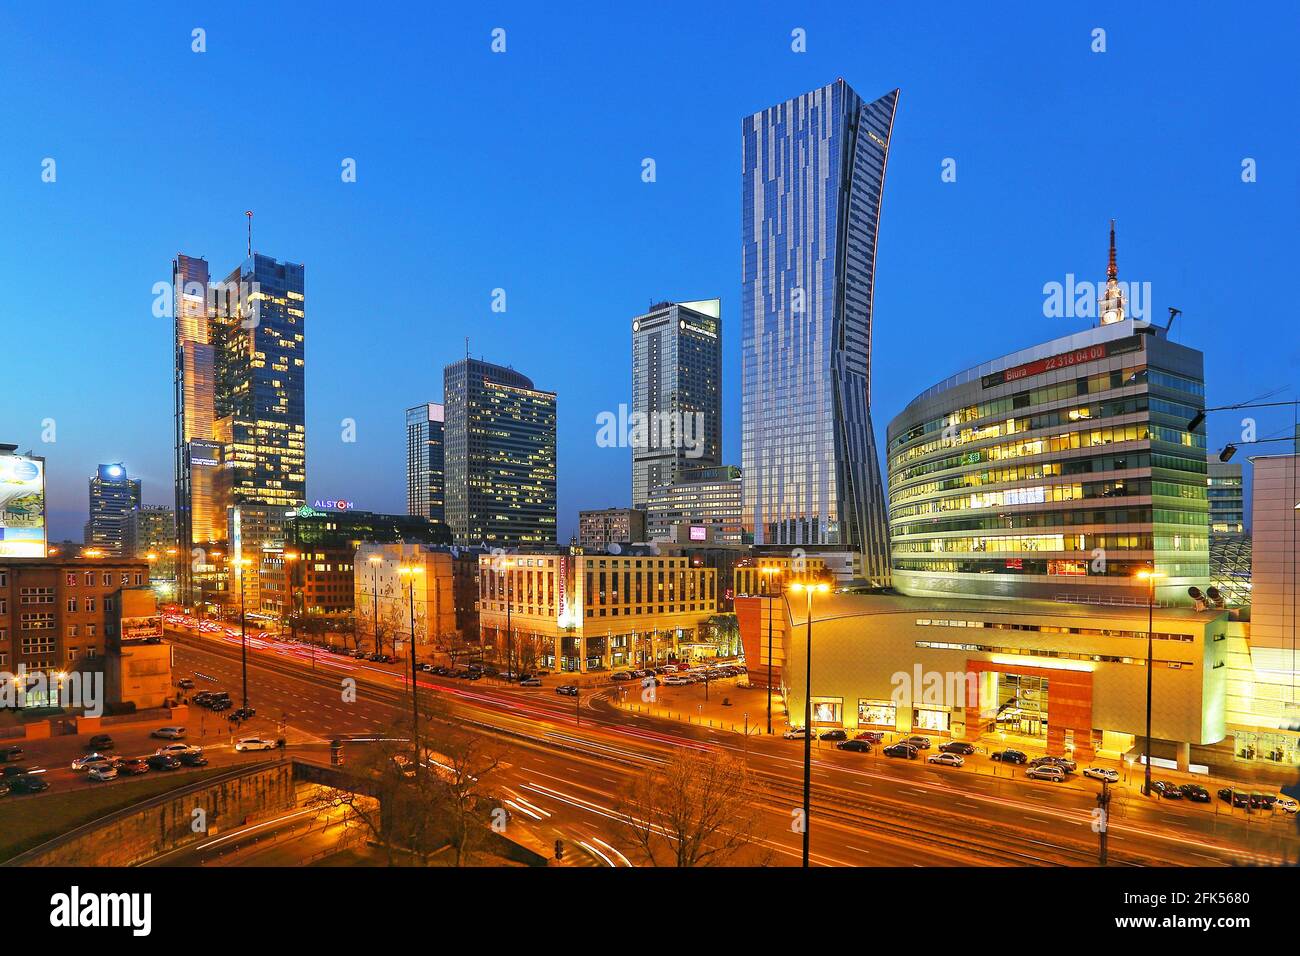 Poland, Warsaw, Jan Pawel II avenue, Masovia voivodeship. Stock Photo